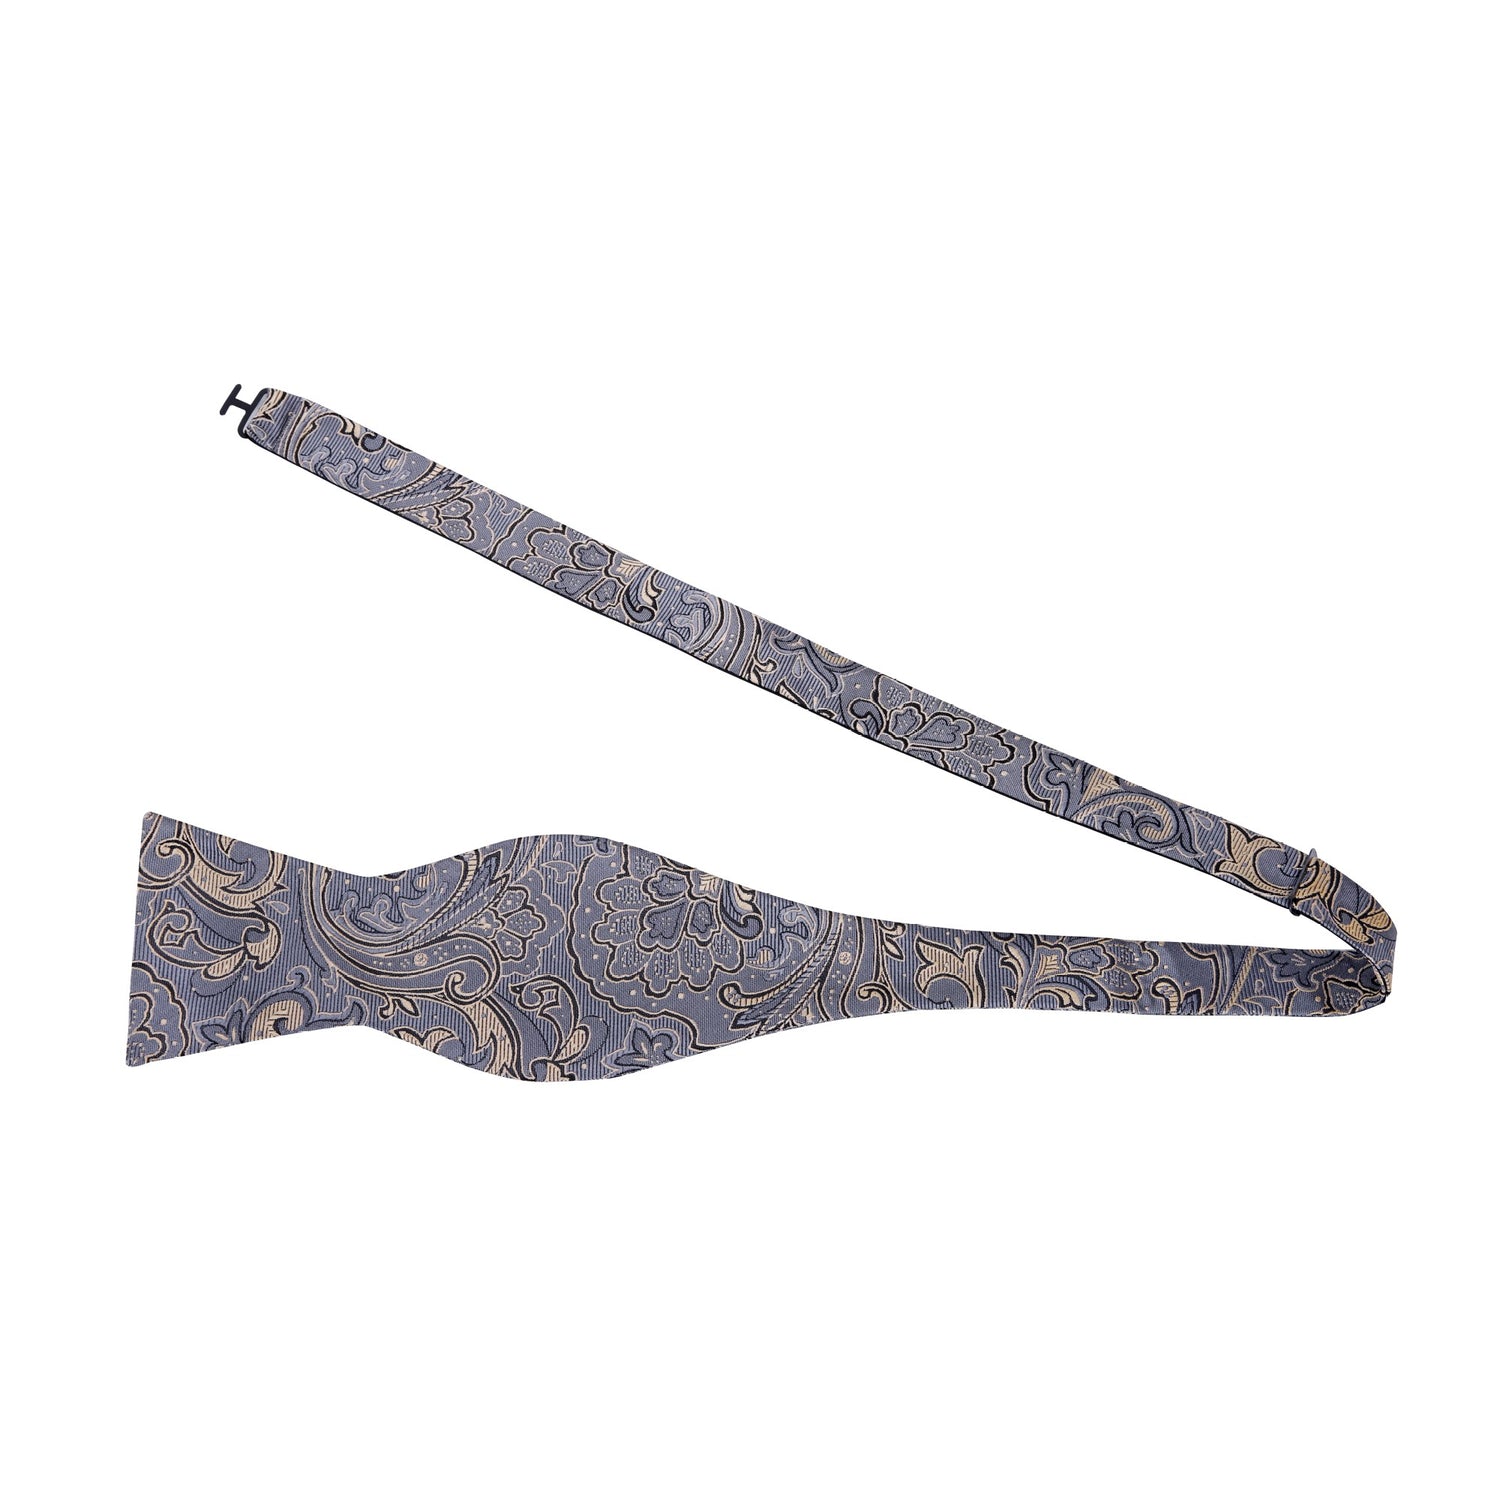 Untied: A Grey, Cream, Black Intricate Paisley Pattern Silk Self-Tie Bow Tie